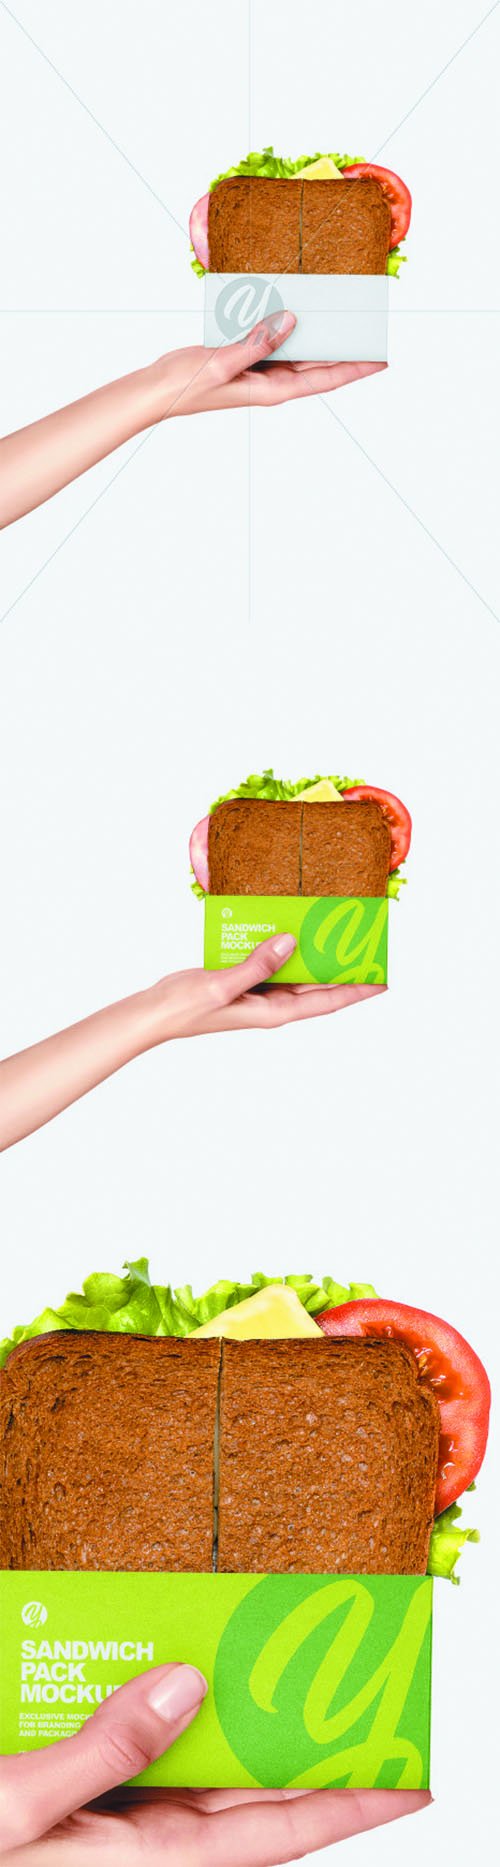 Sandwich Pack in a Hand Mockup 68904 TIF